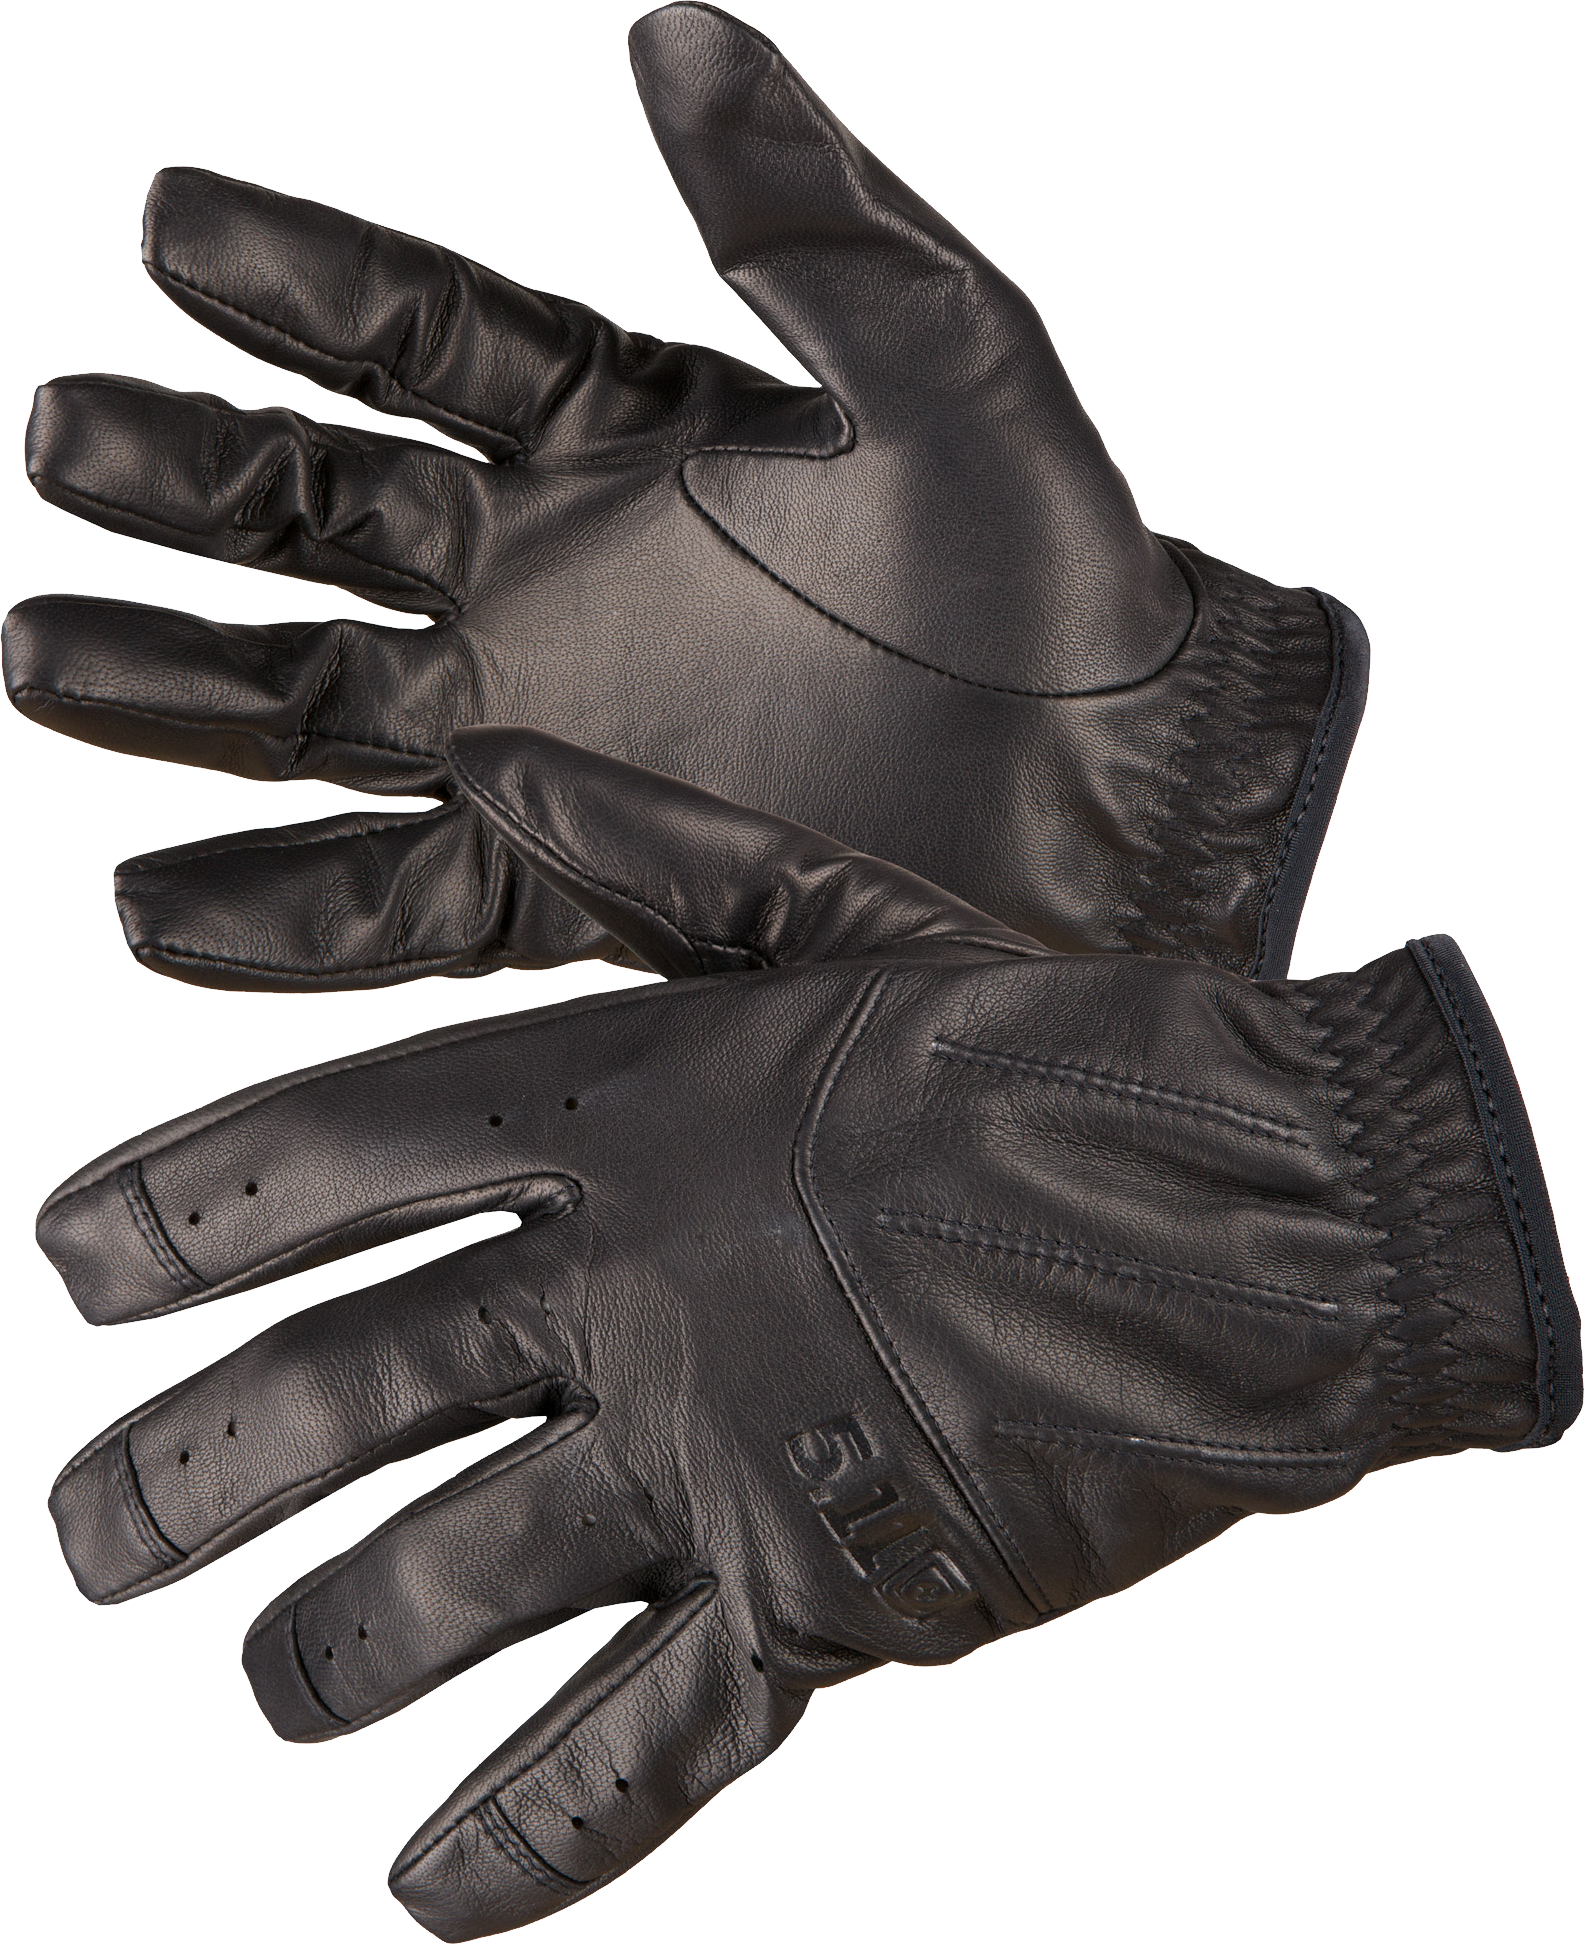 Winter gloves PNG image